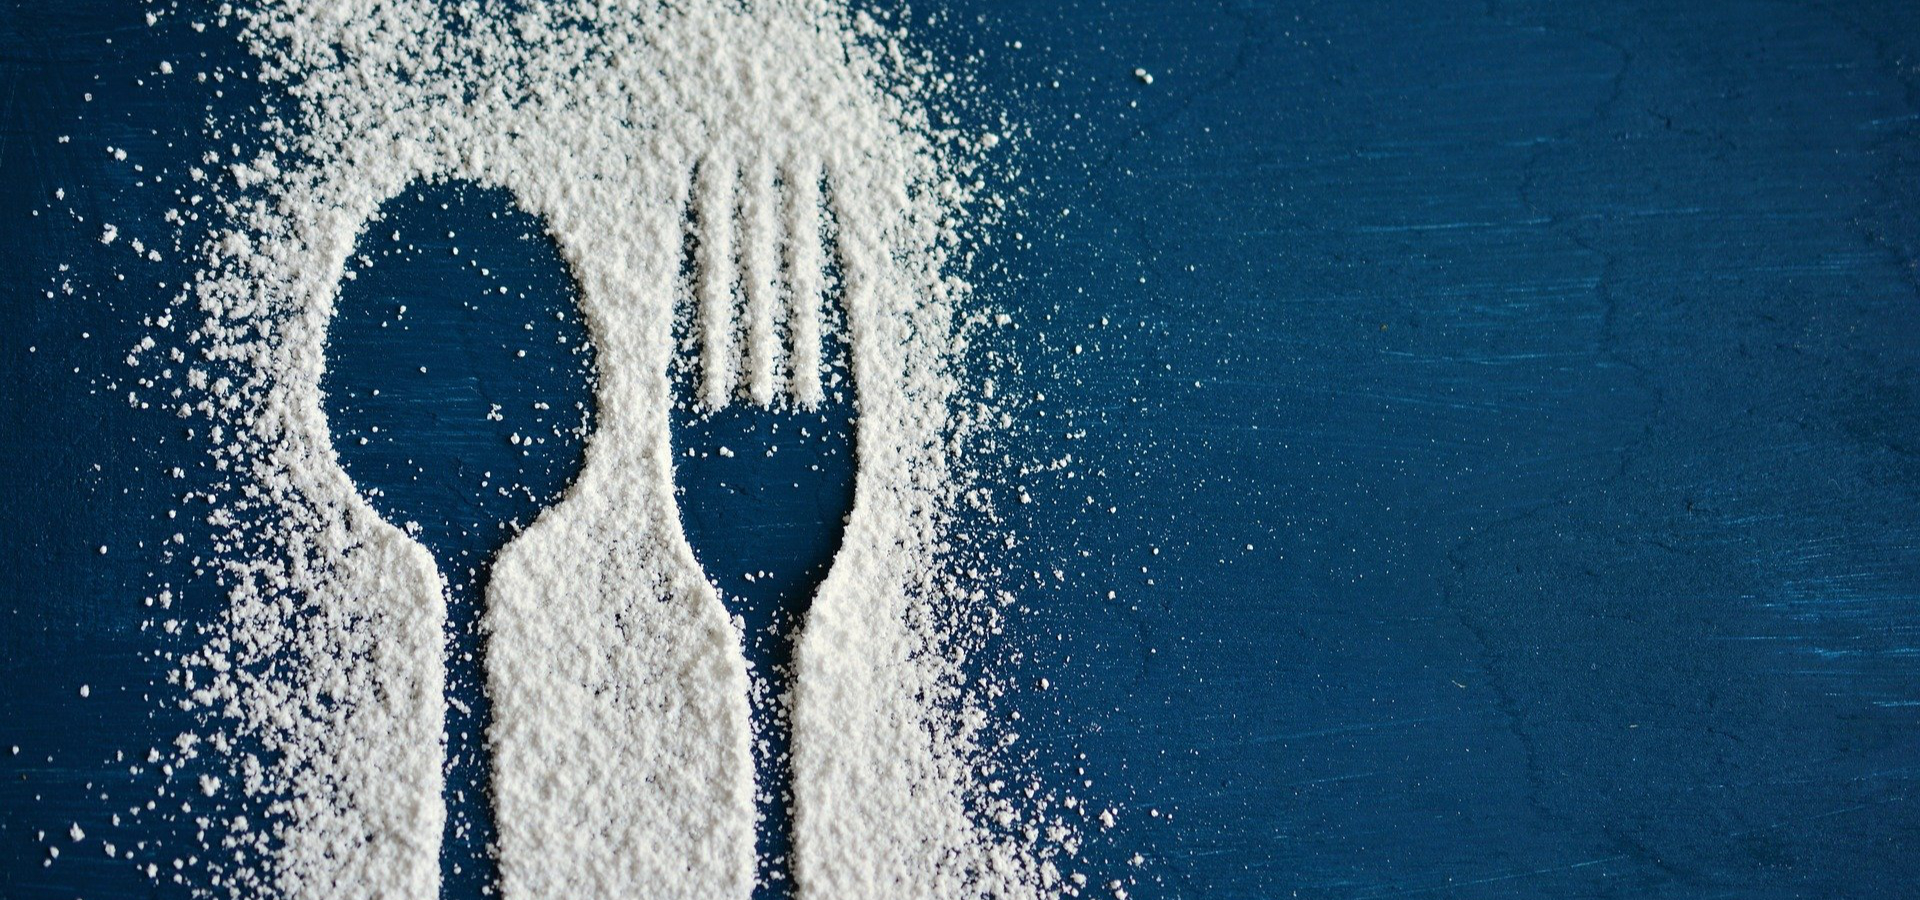 Portuguese children and adolescents have a high sugar intake